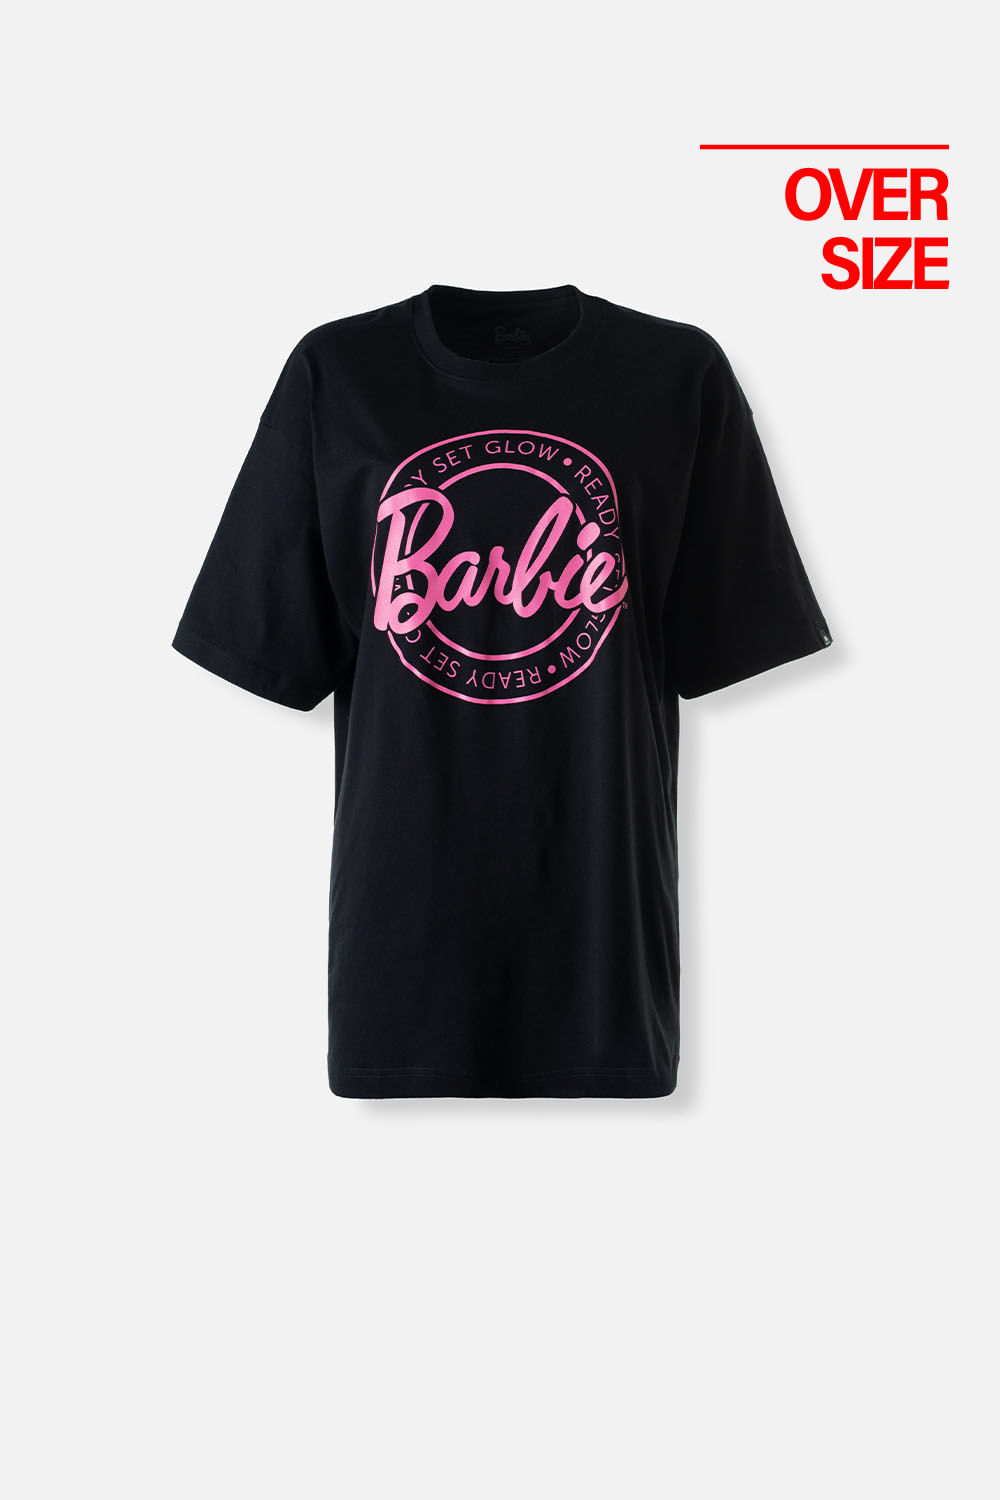 Camiseta Barbie negra manga corta oversize para mujer ( Te recomendamos comprar una talla menor a la habitual) XS-0